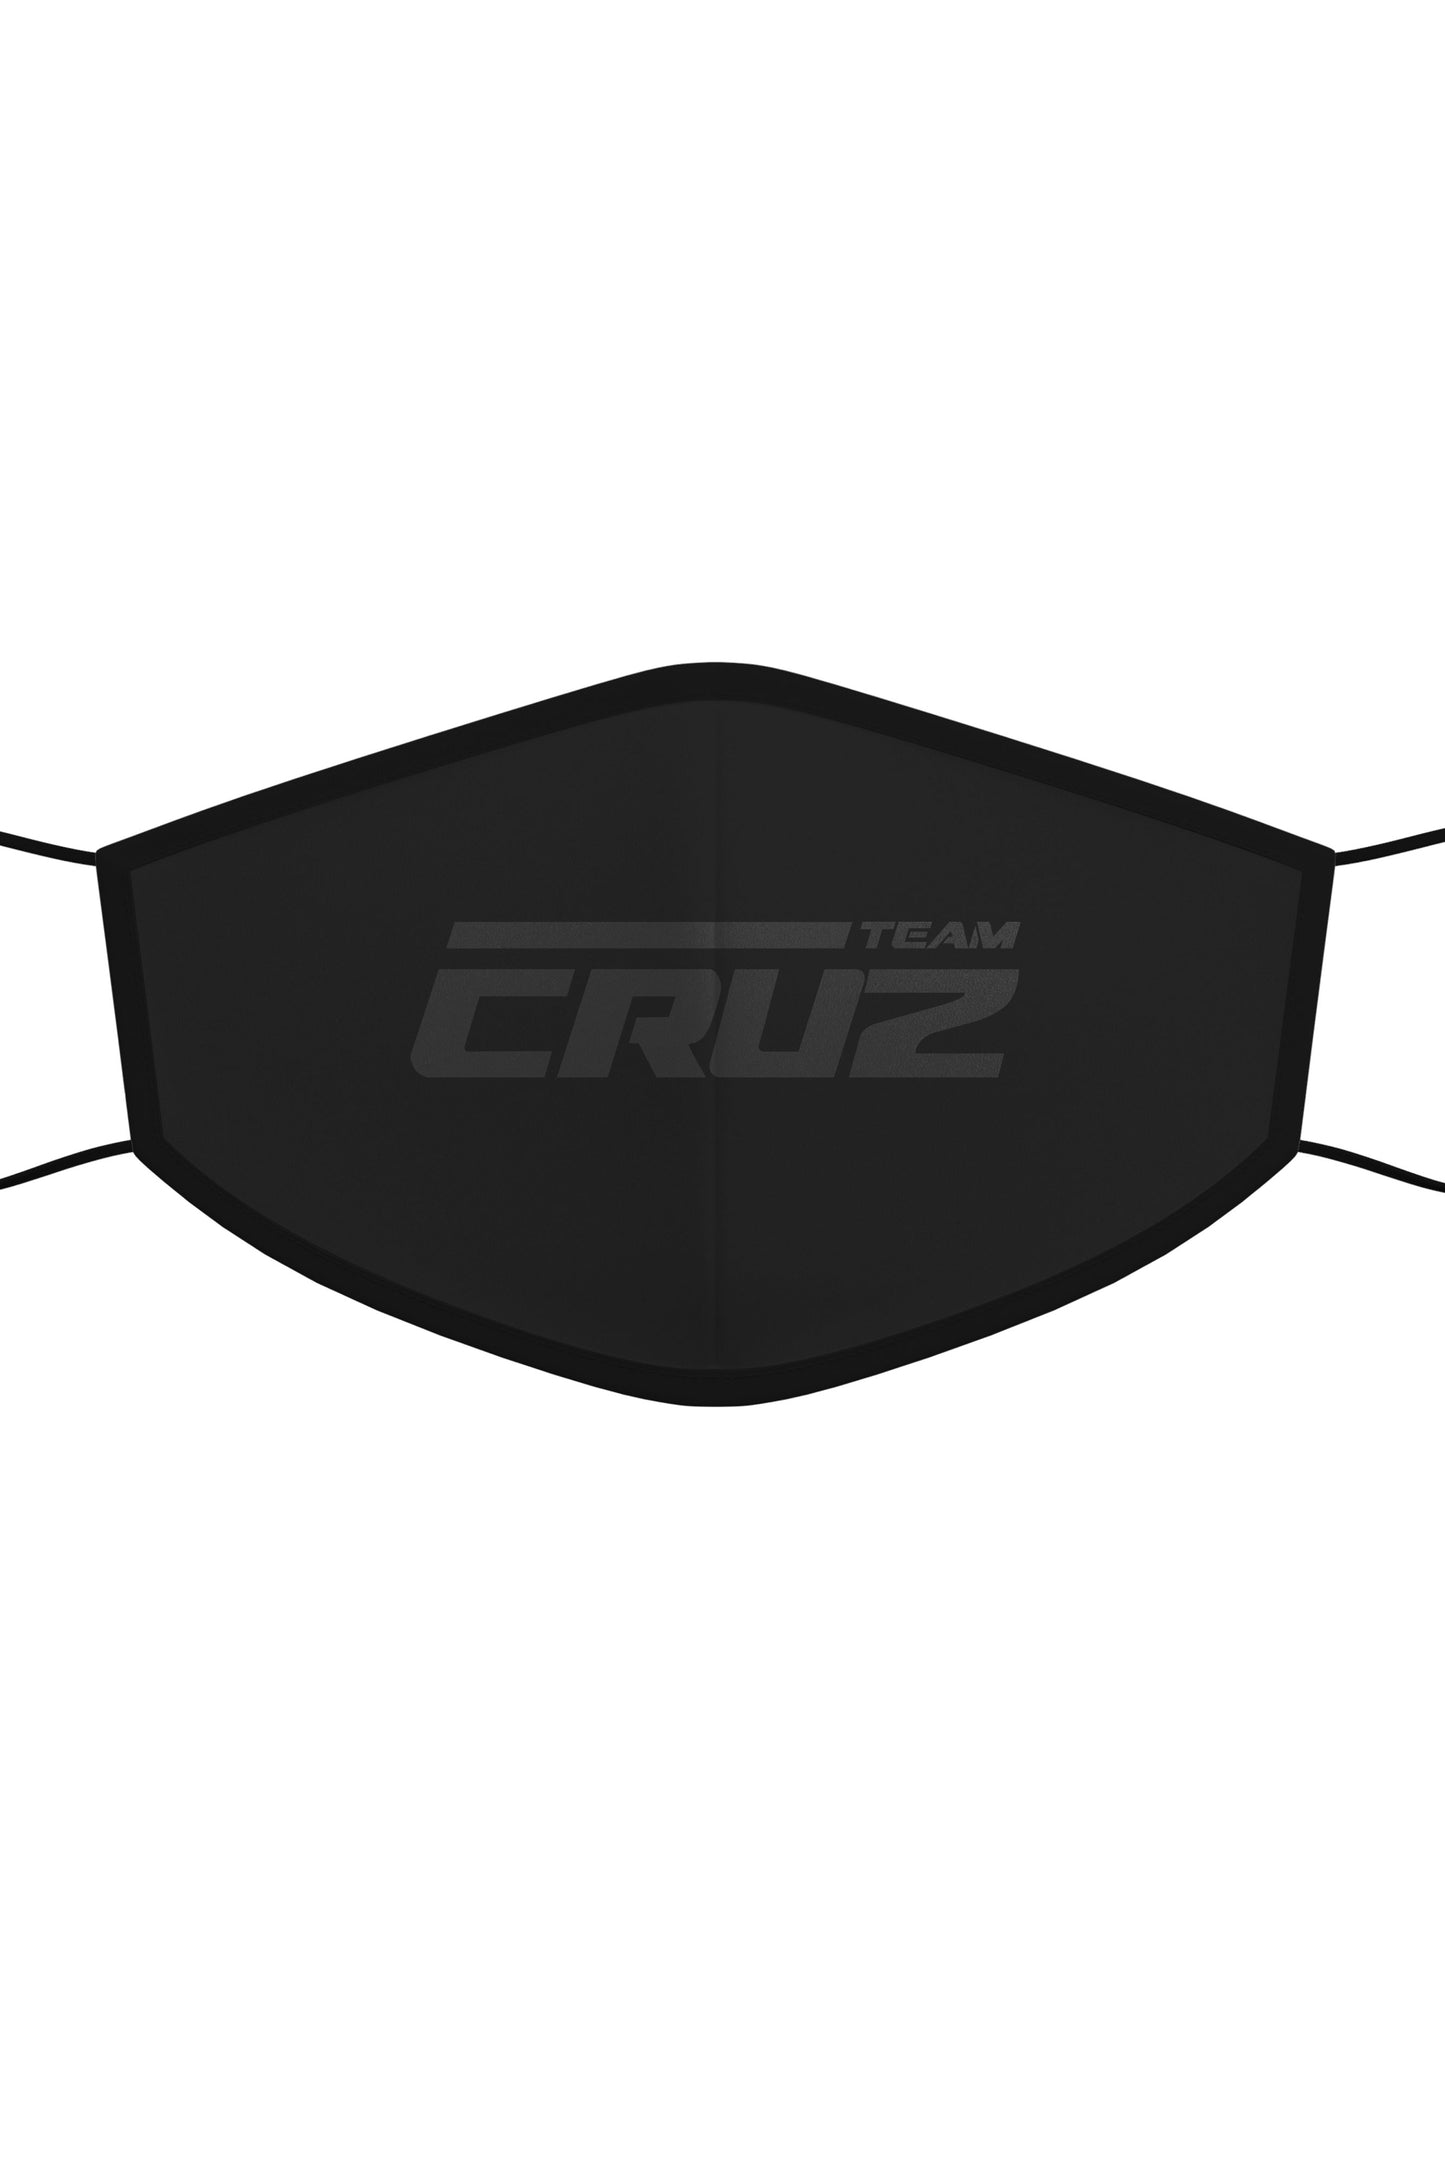 Dominick Cruz “TeamCruzFamily” Mask